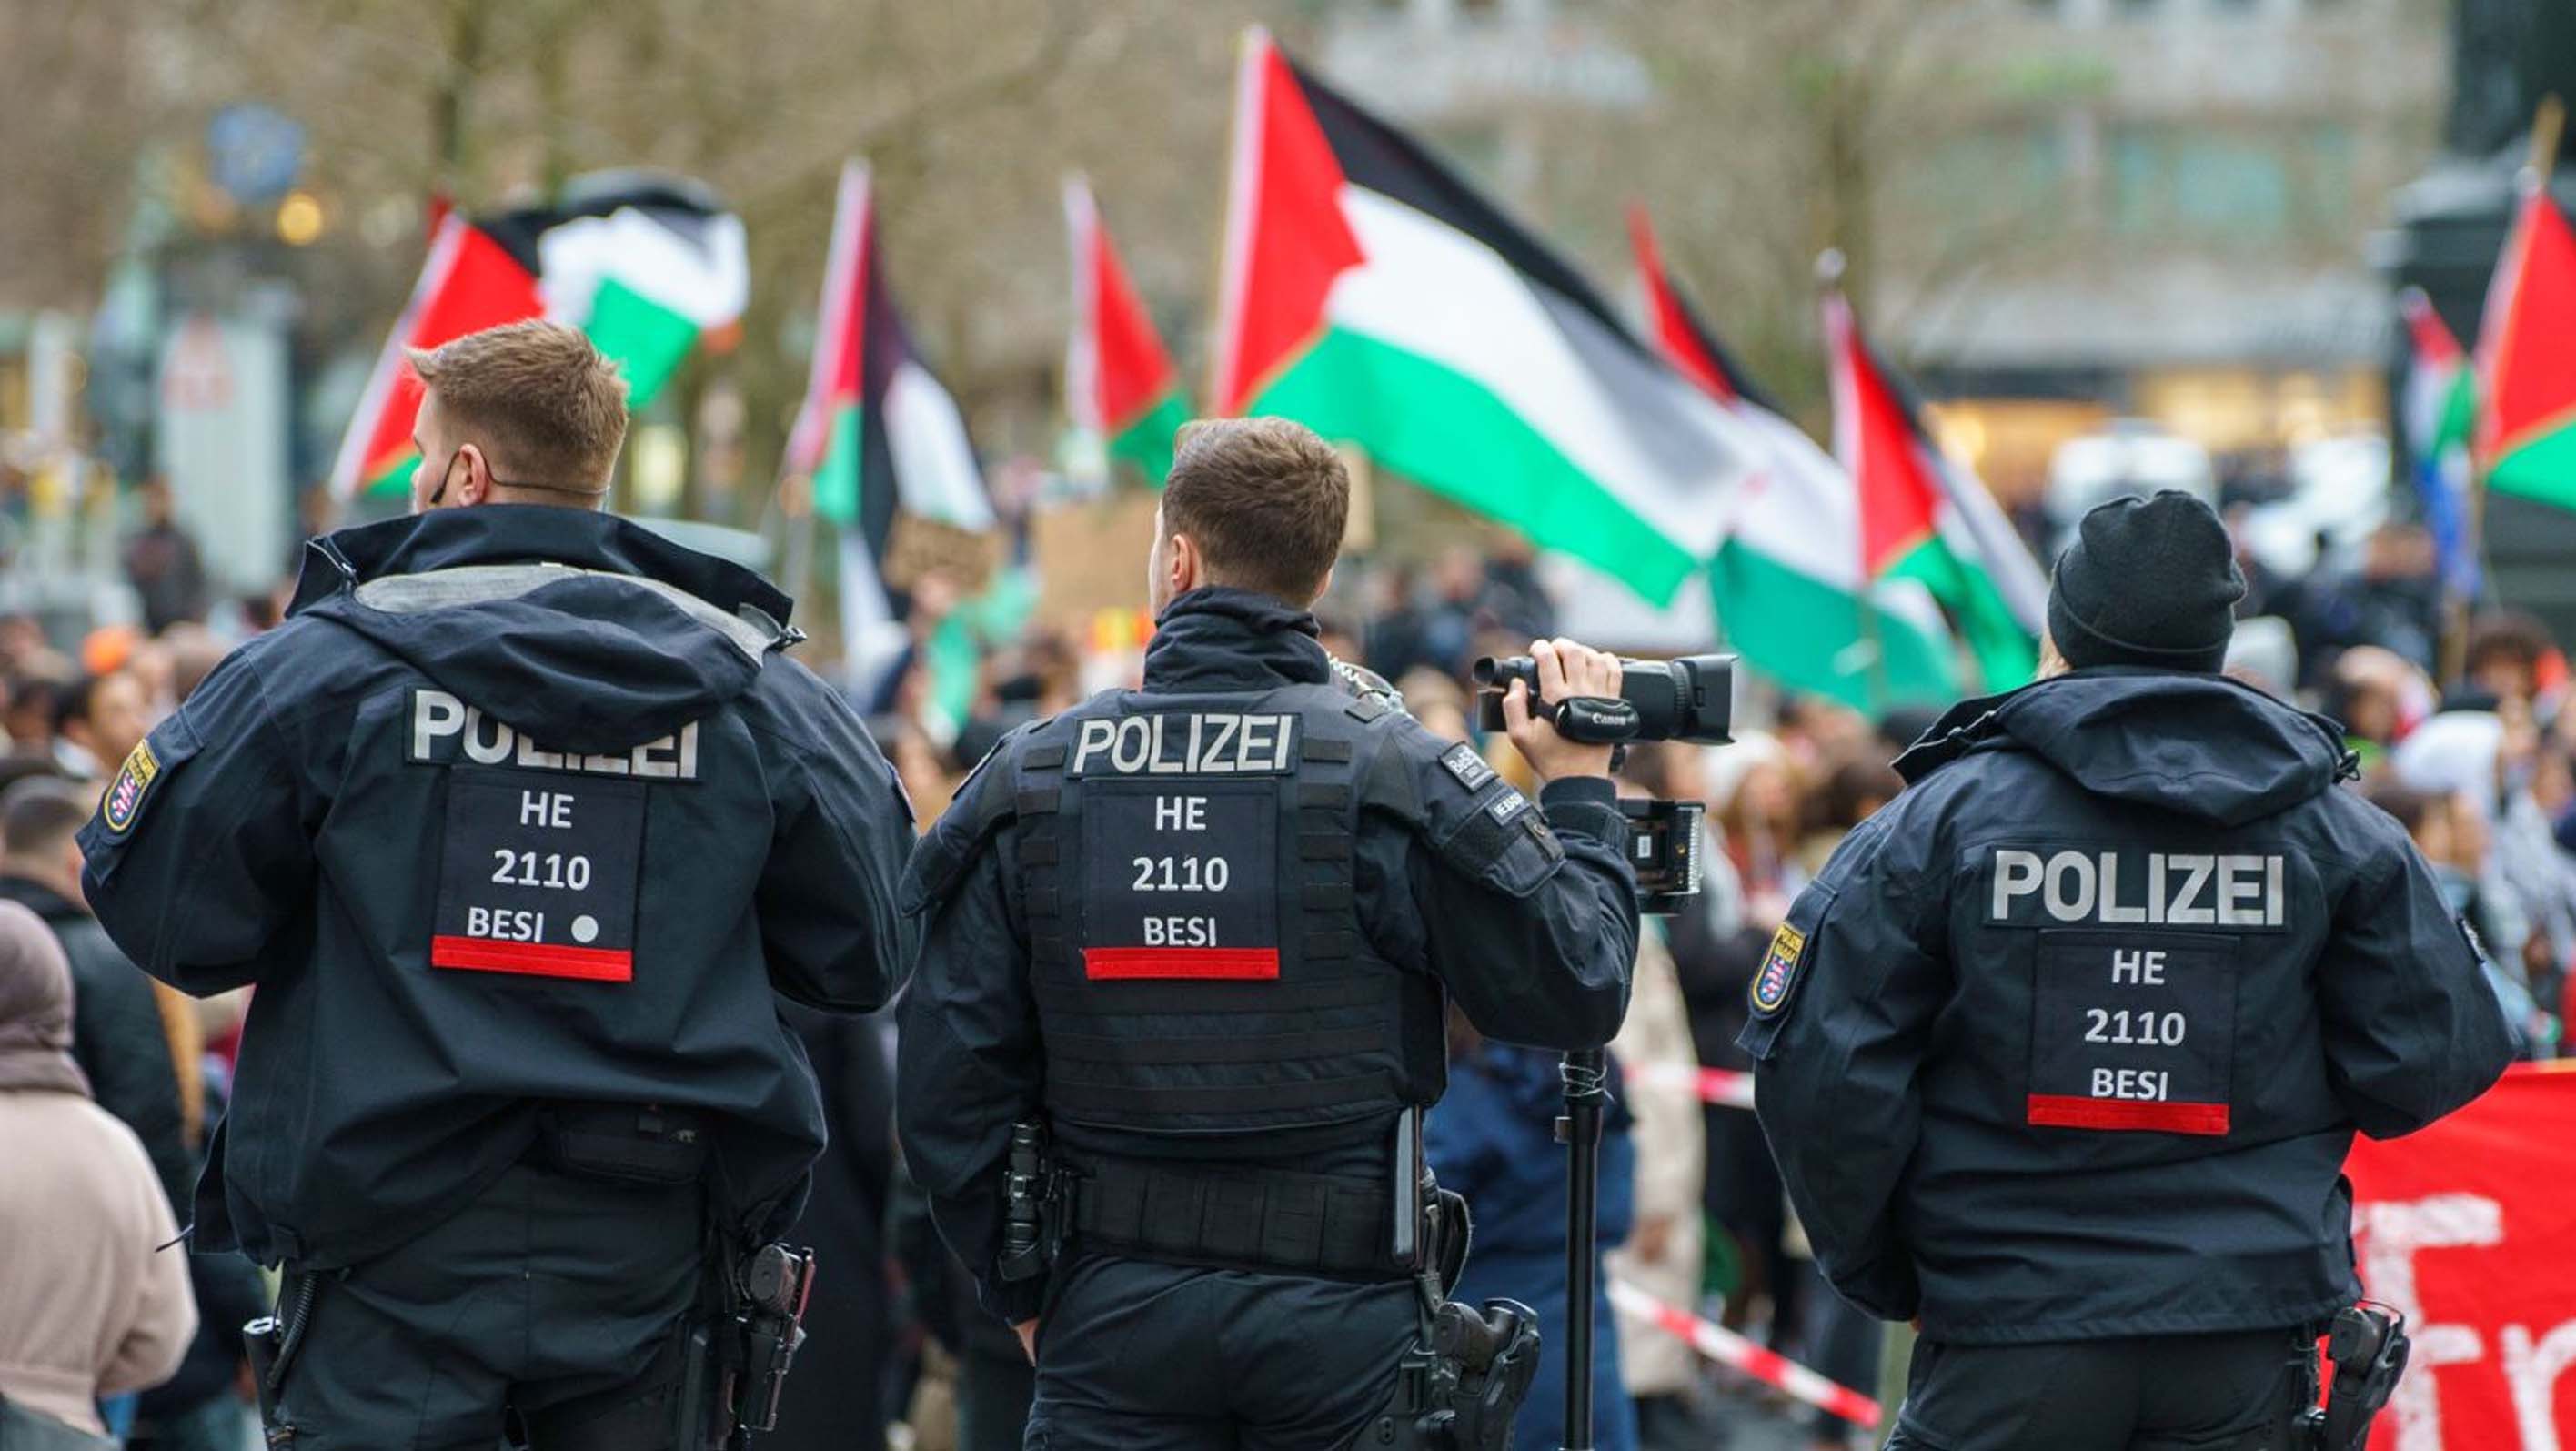 Karman condemns German deportation law for pro-Palestine posts